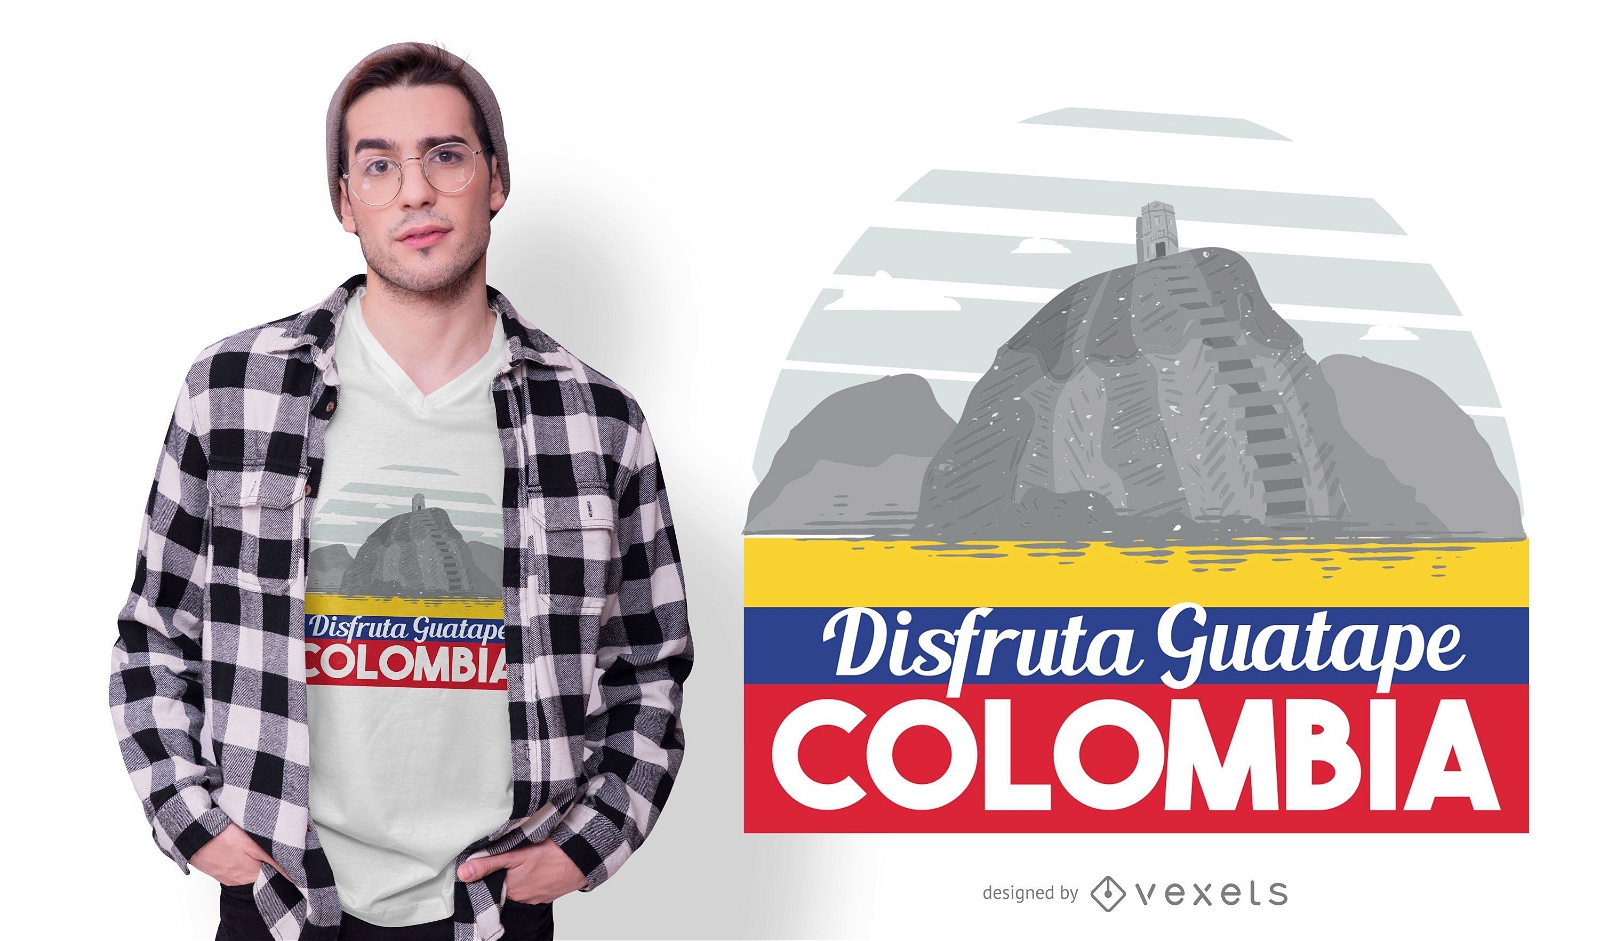 Enjoy colombia t-shirt design